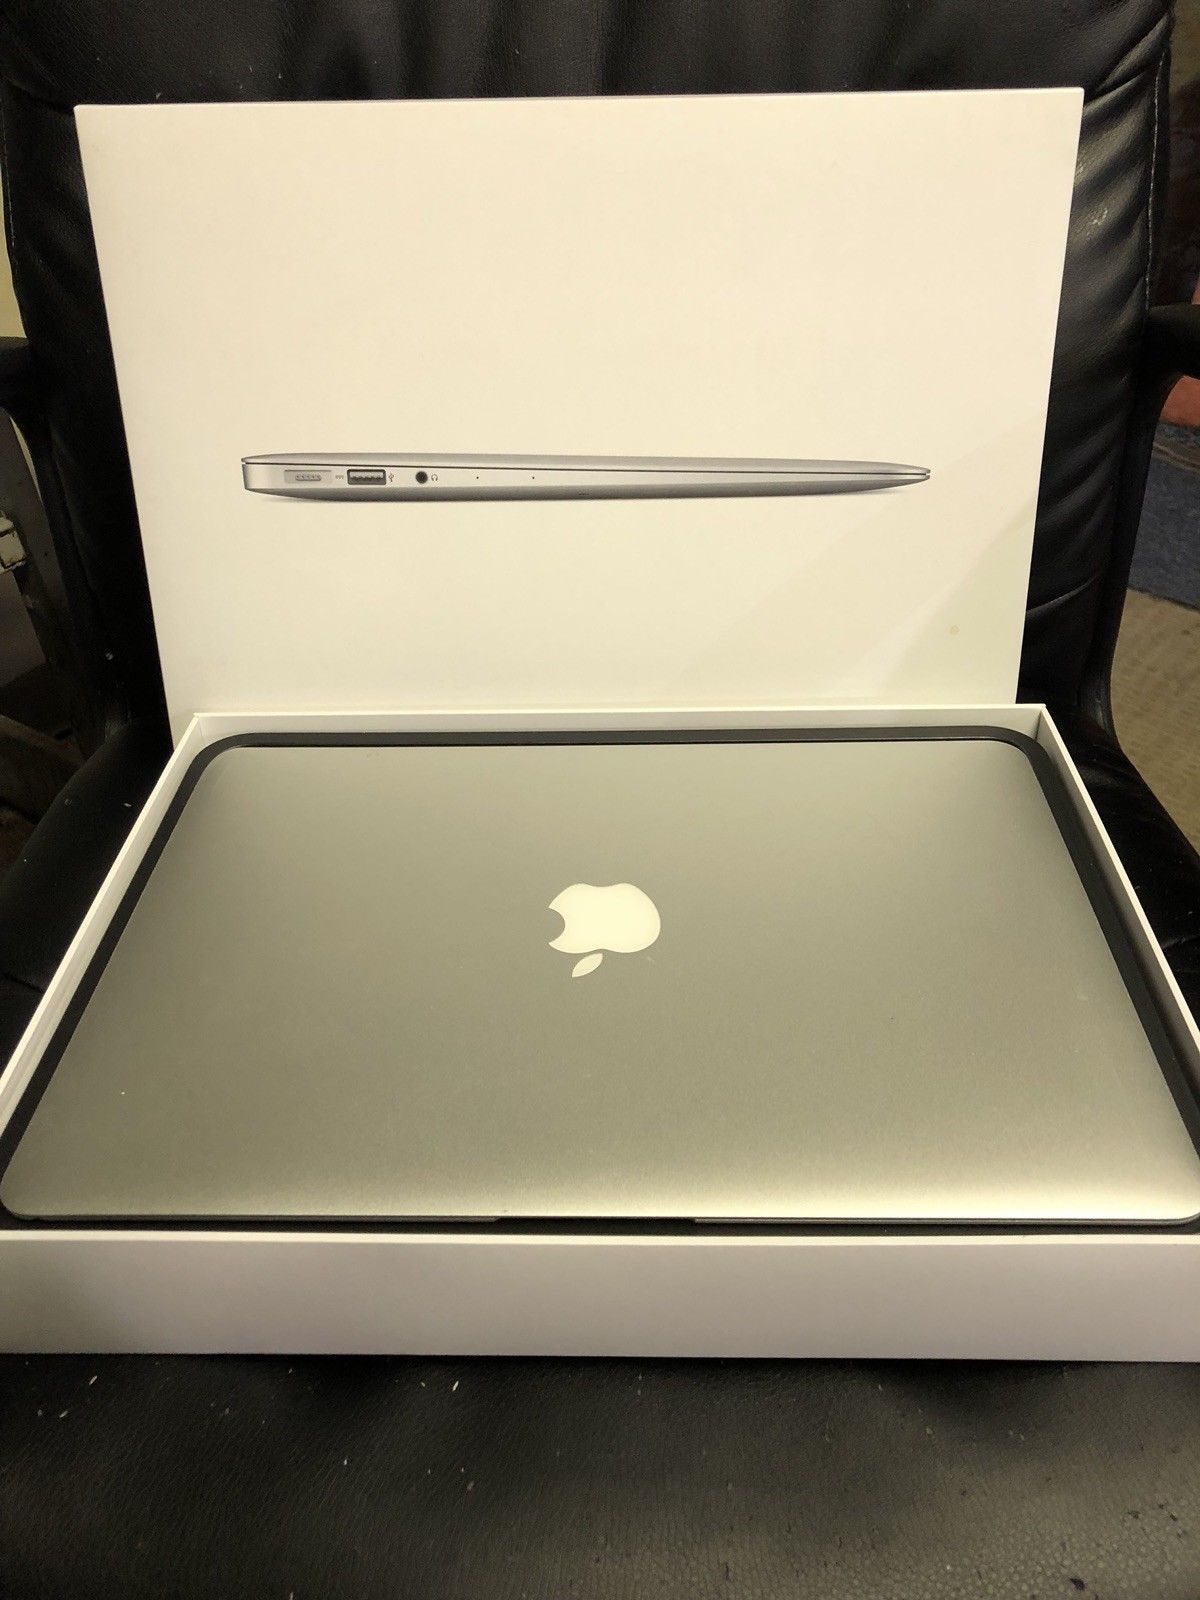 2015 MacBook Air intel i7 processor 256gb SSD For Sale